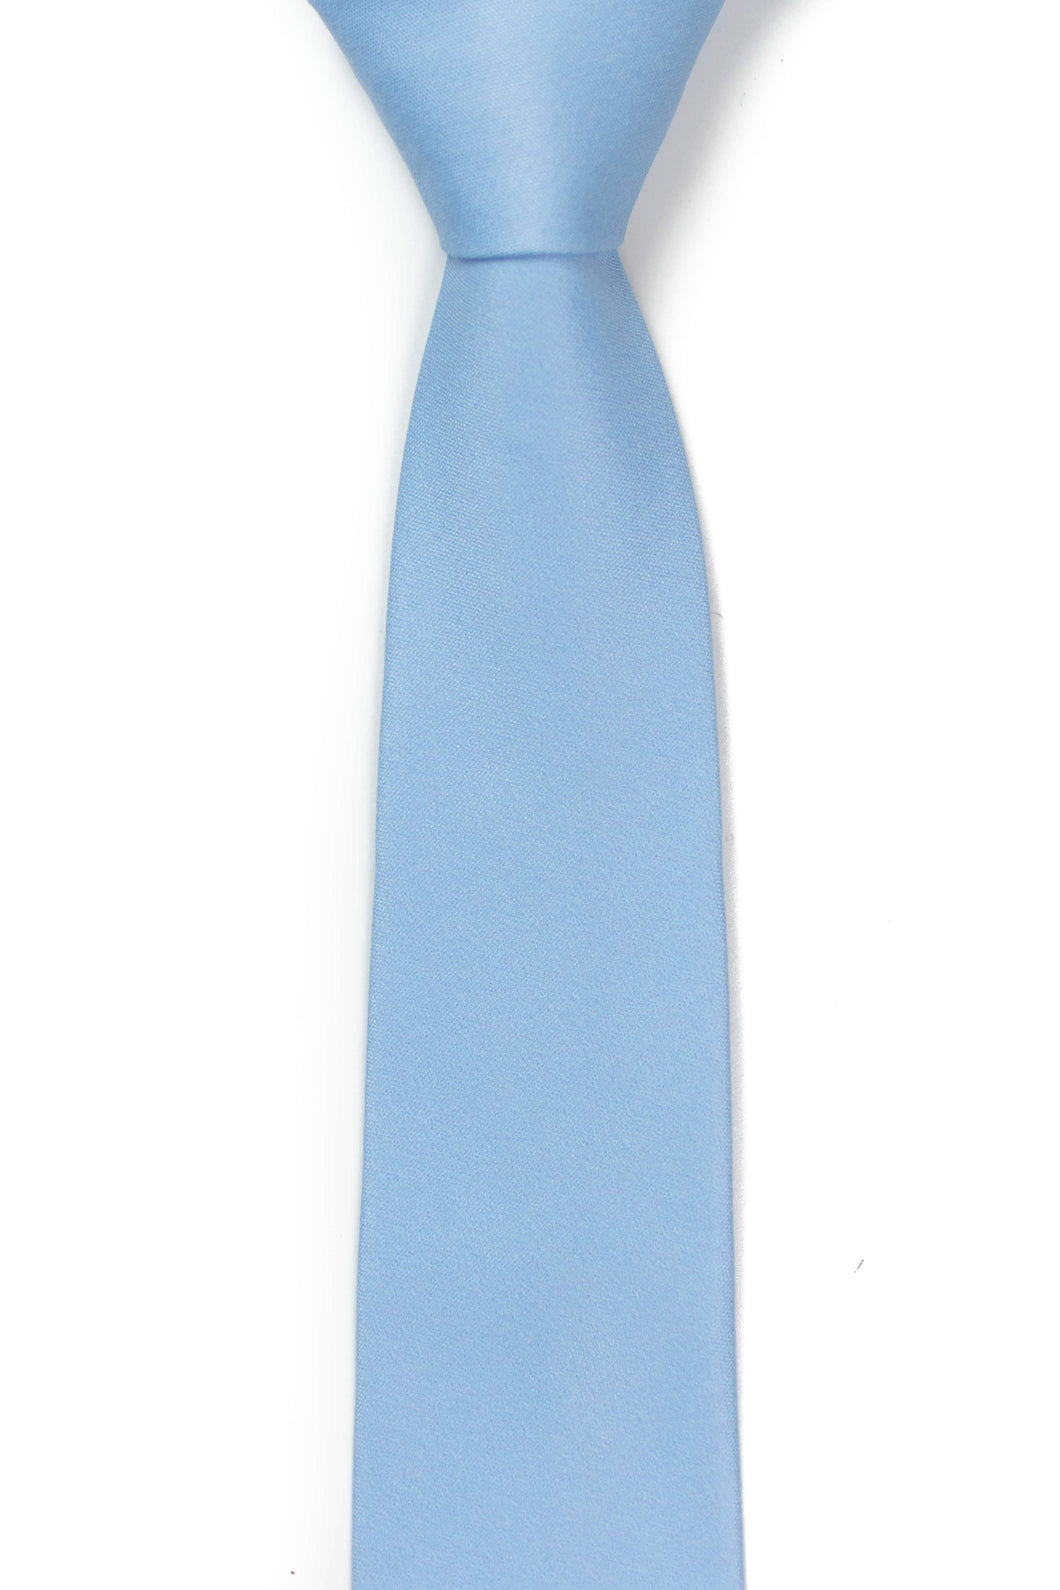 Skye missionary tie